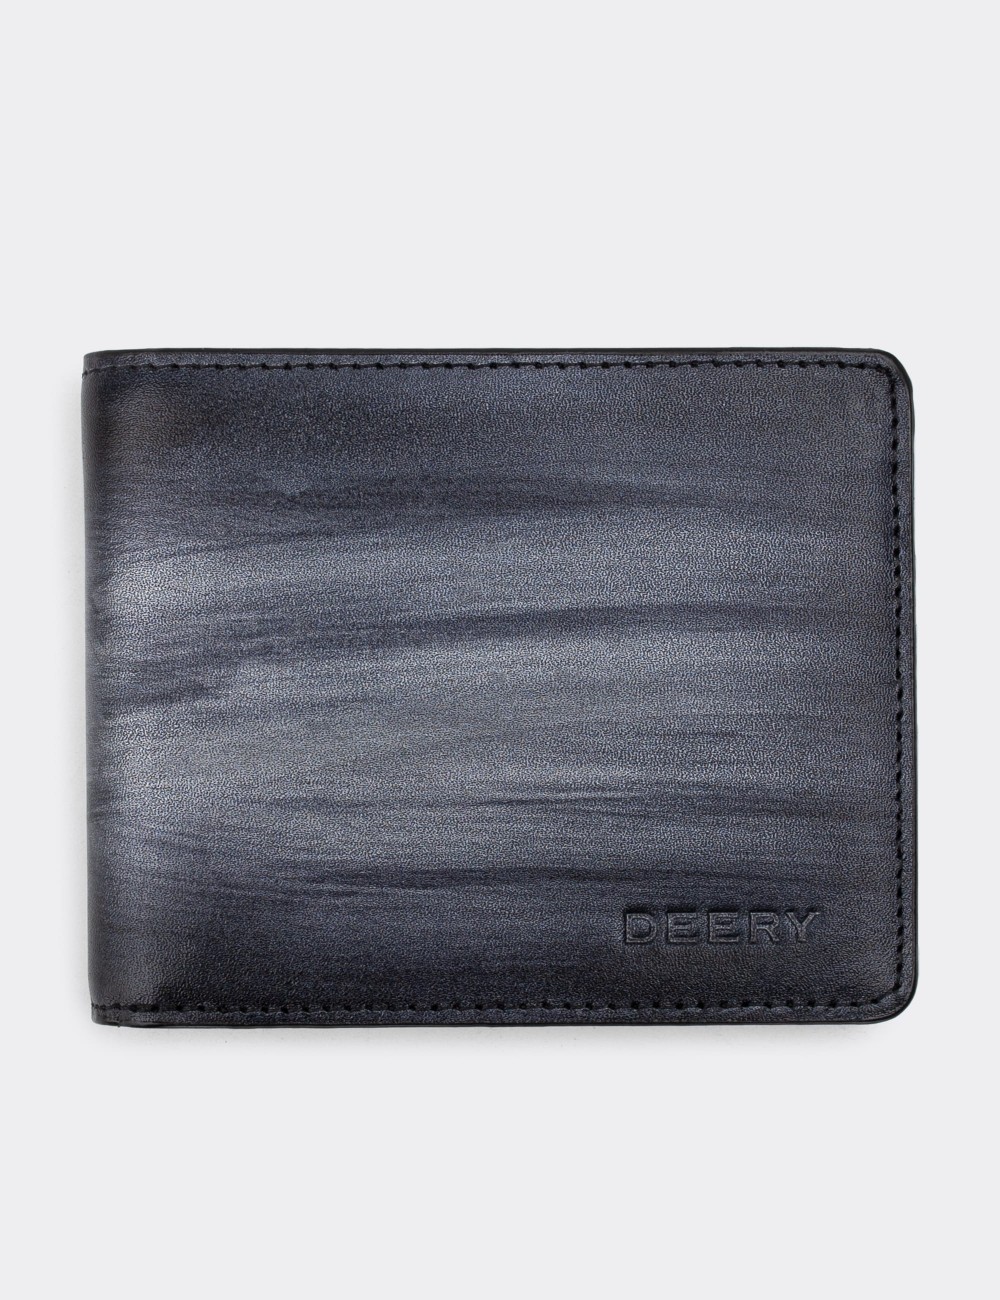 Leather Gray Men's Wallet - 00390MANTZ01